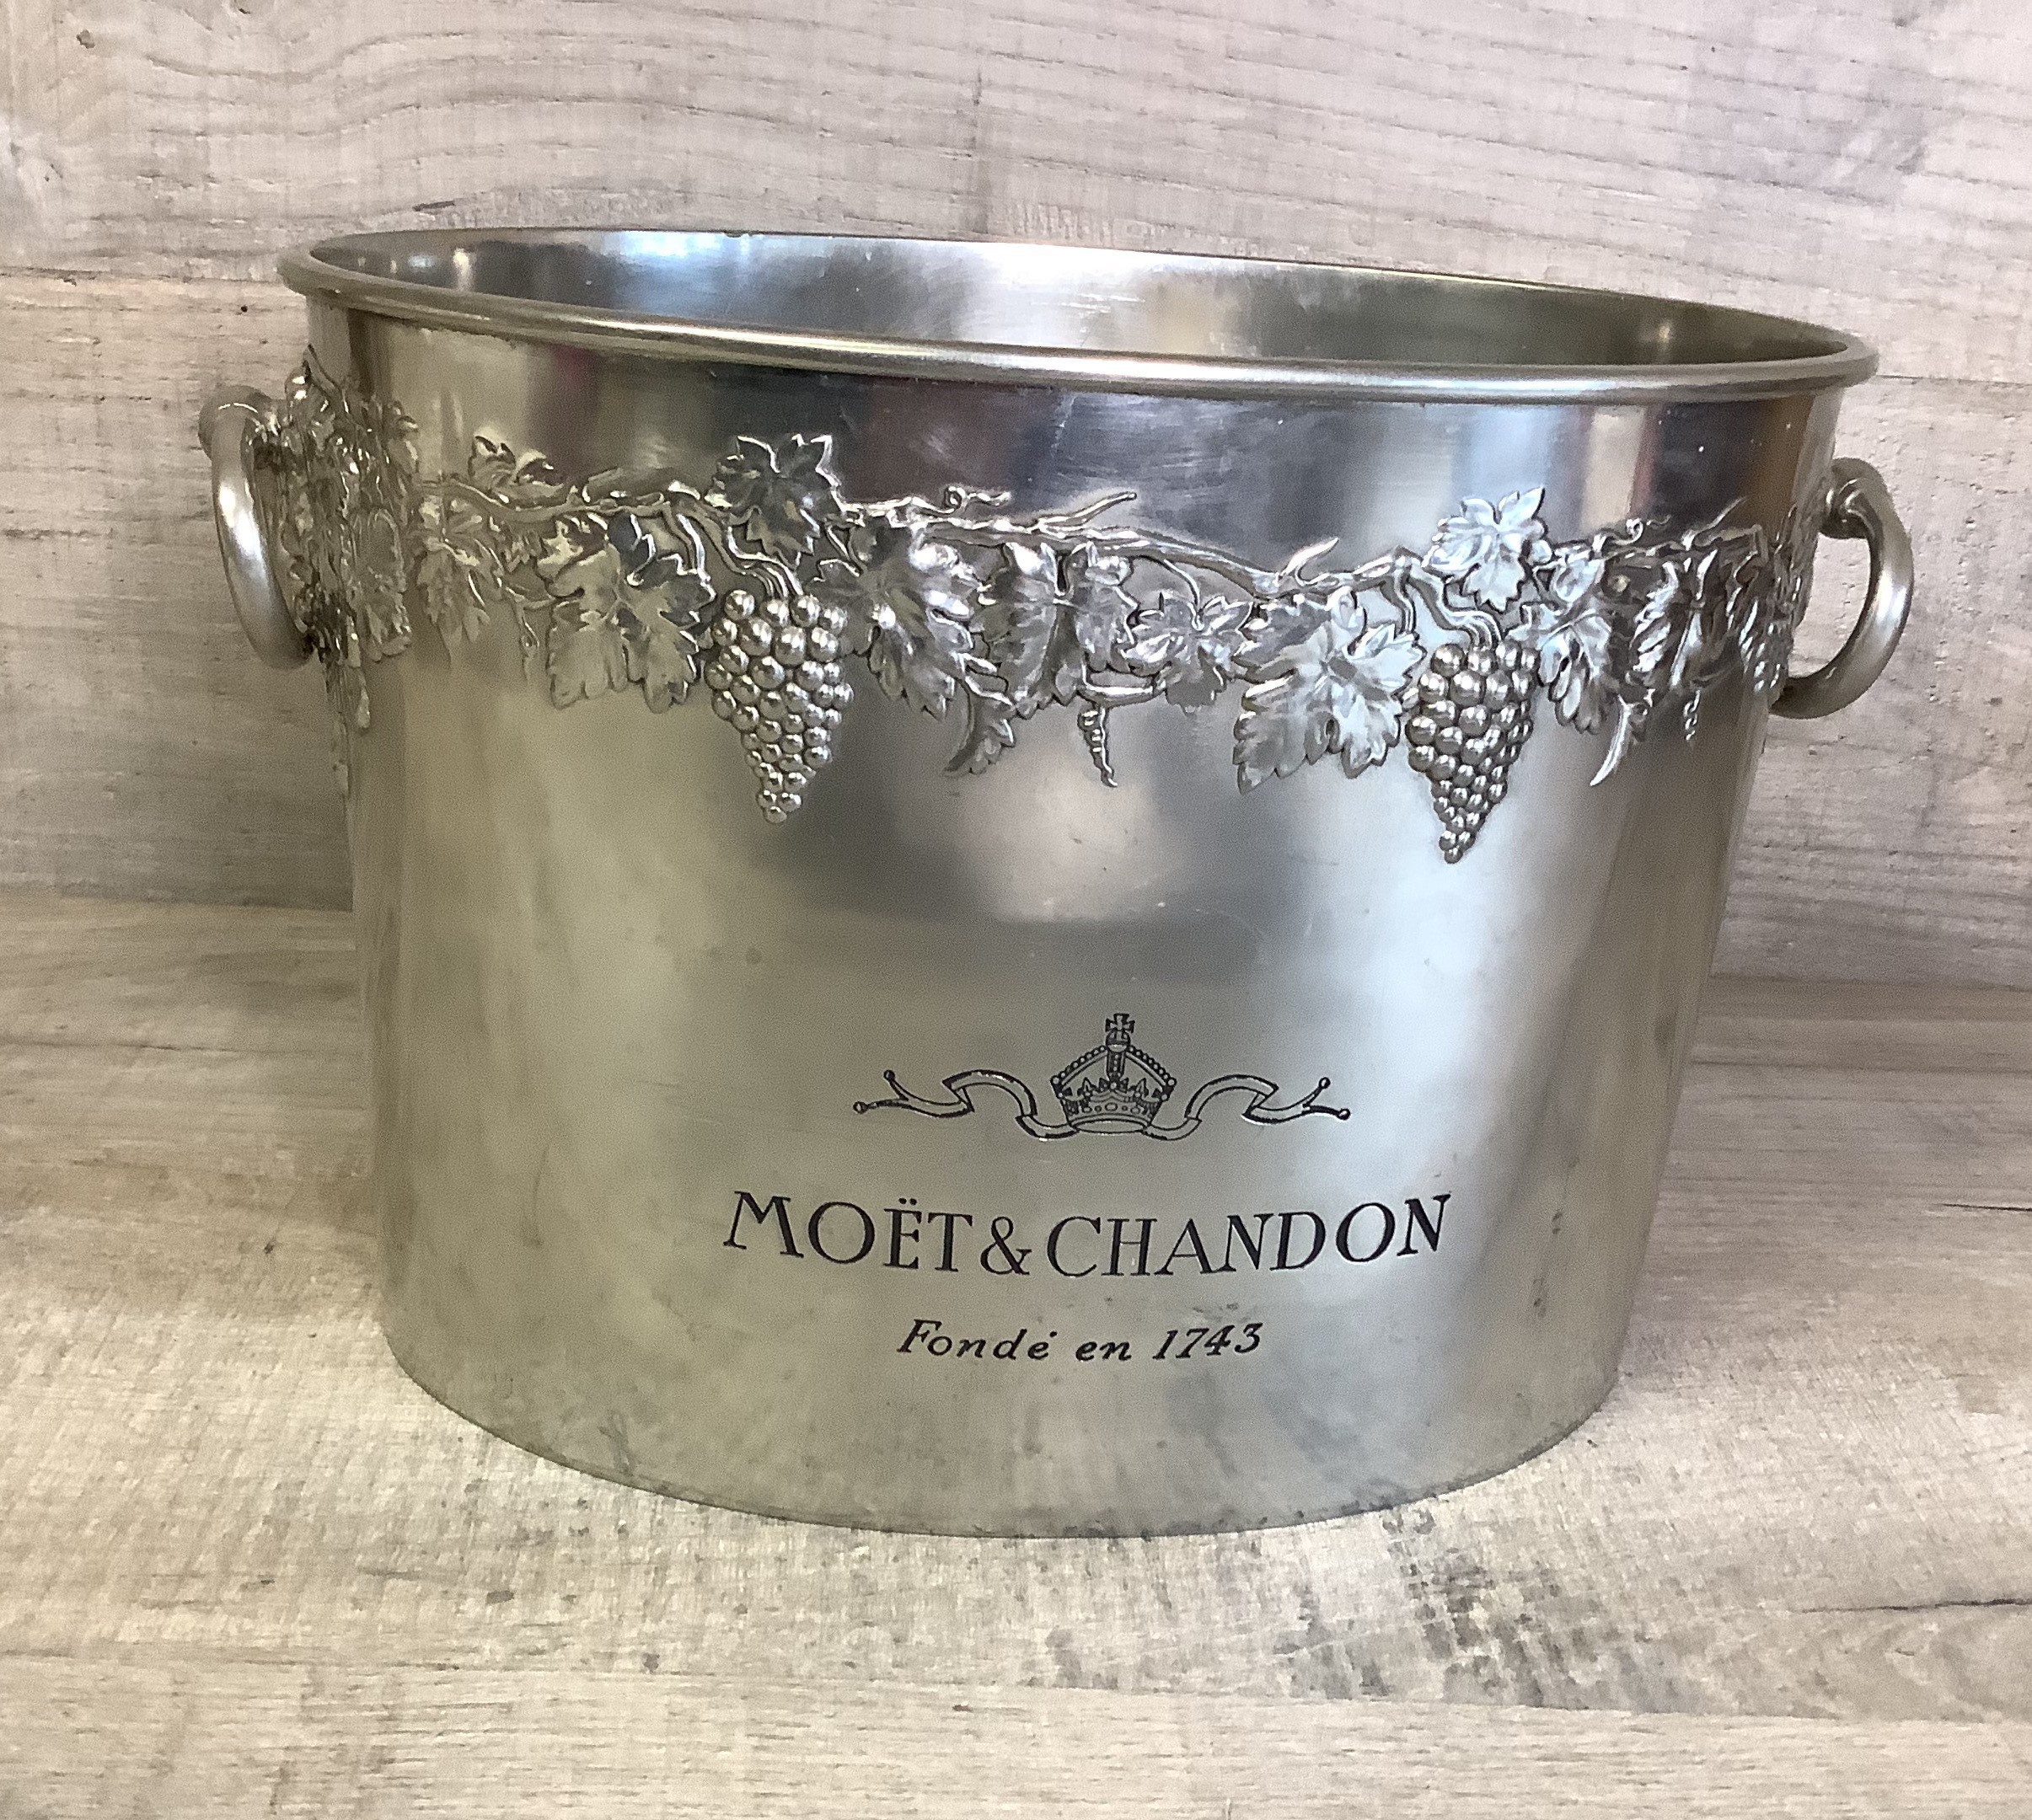 Moet & Chandon Cooler de Prestige/Double Magnum Champagne Ice Bucket From Moet et Chandon Vintage Ma